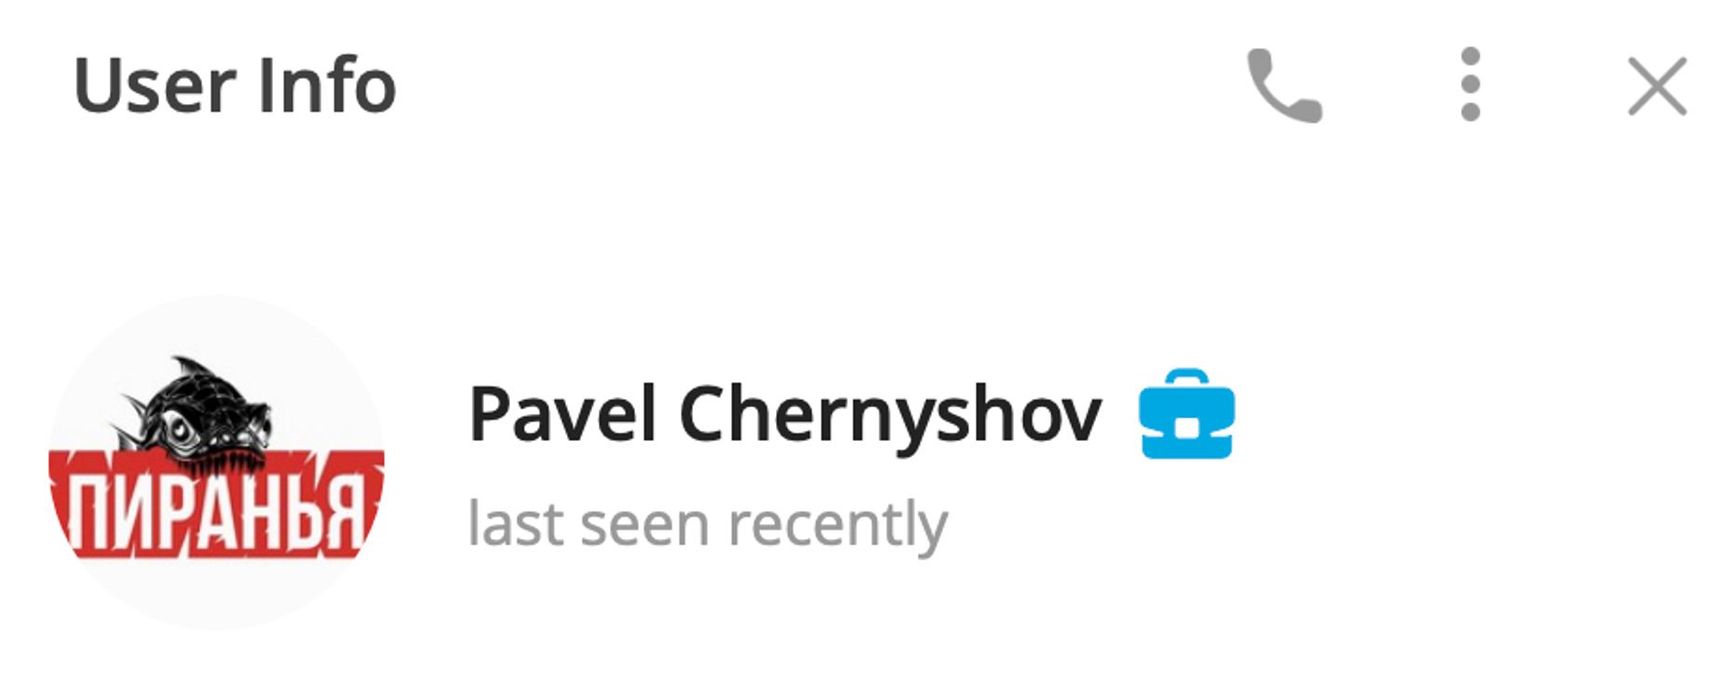 Pavel Chernyshov changed his user pic on Telegram